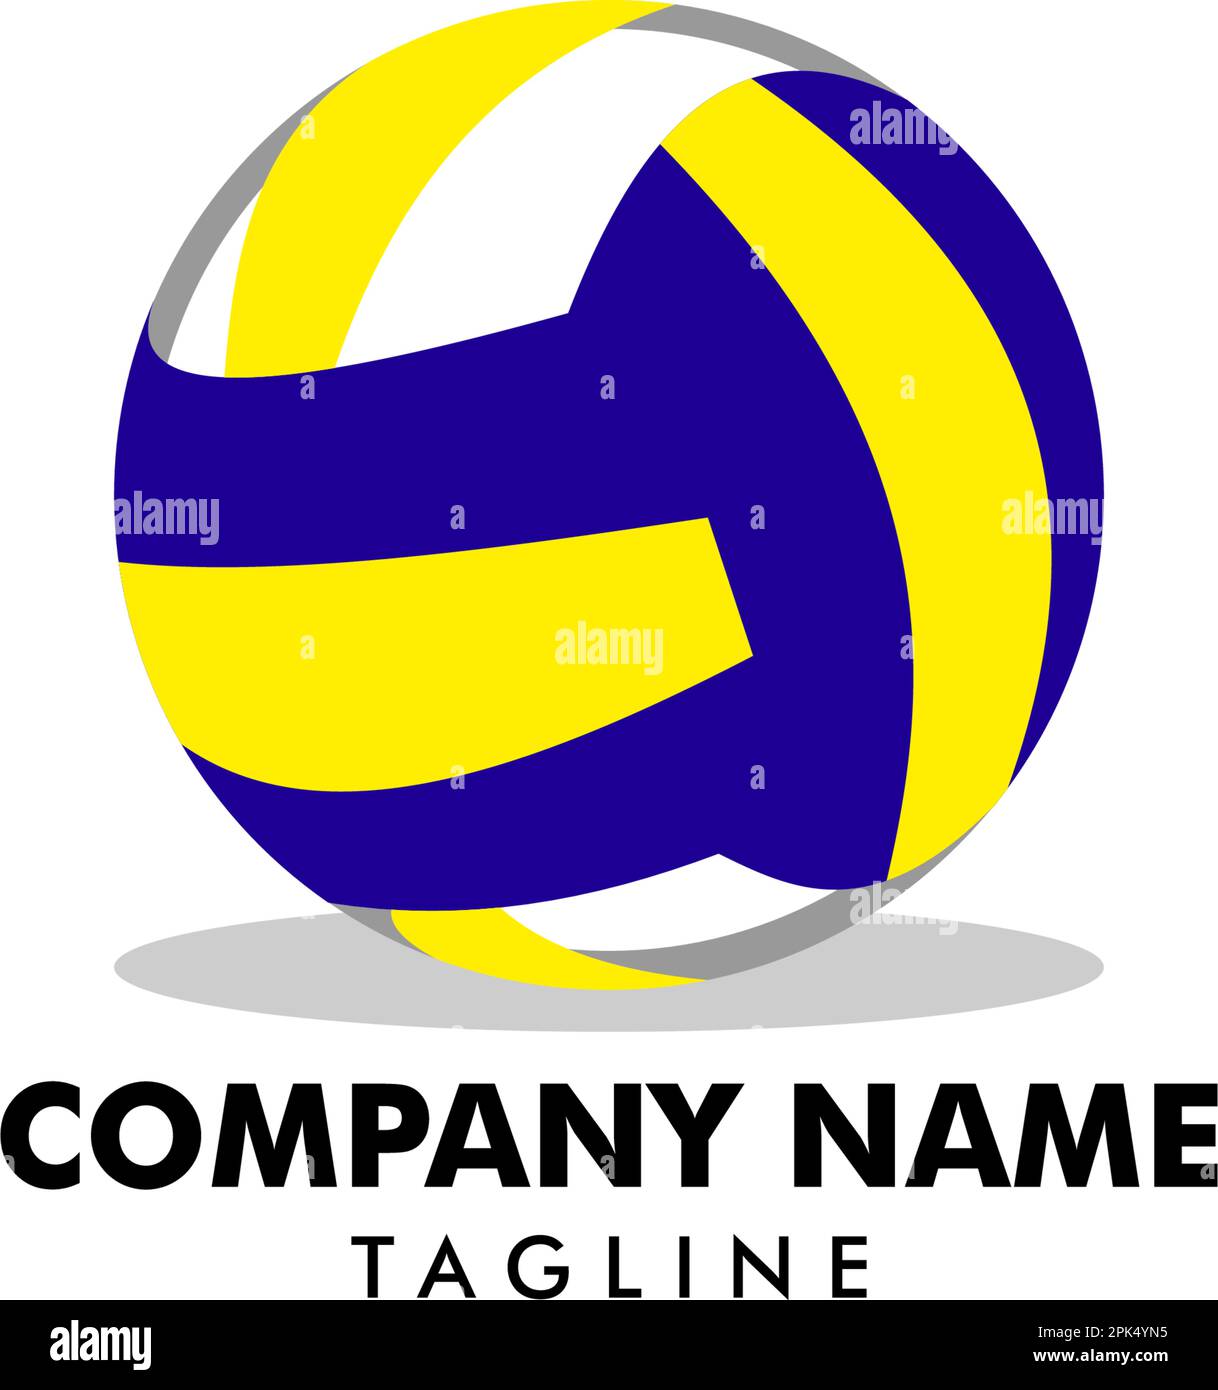 Volleyball logo template vector illustration Stock Vector Image & Art ...